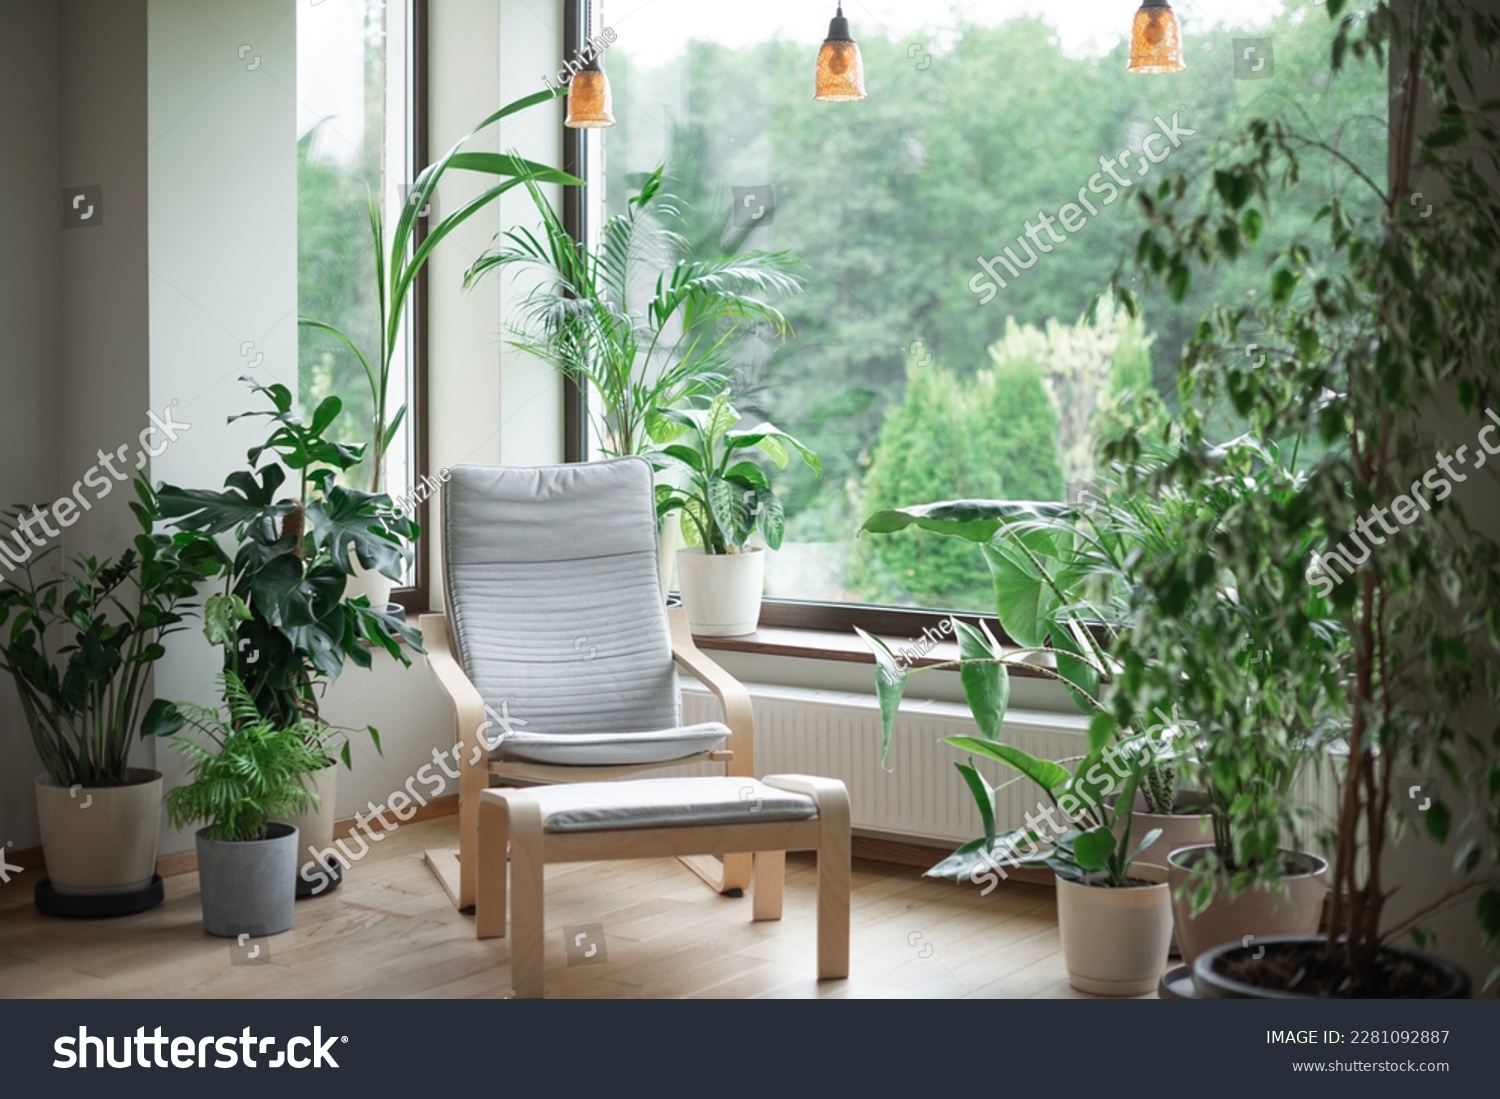 Grey armchair, indoor plants, monstera, palm trees. Urban jungle apartment. Biophilia design. Cozy tropical home garden. Home gardening. Gardening, hobby concept Eco friendly decor of living room #2281092887